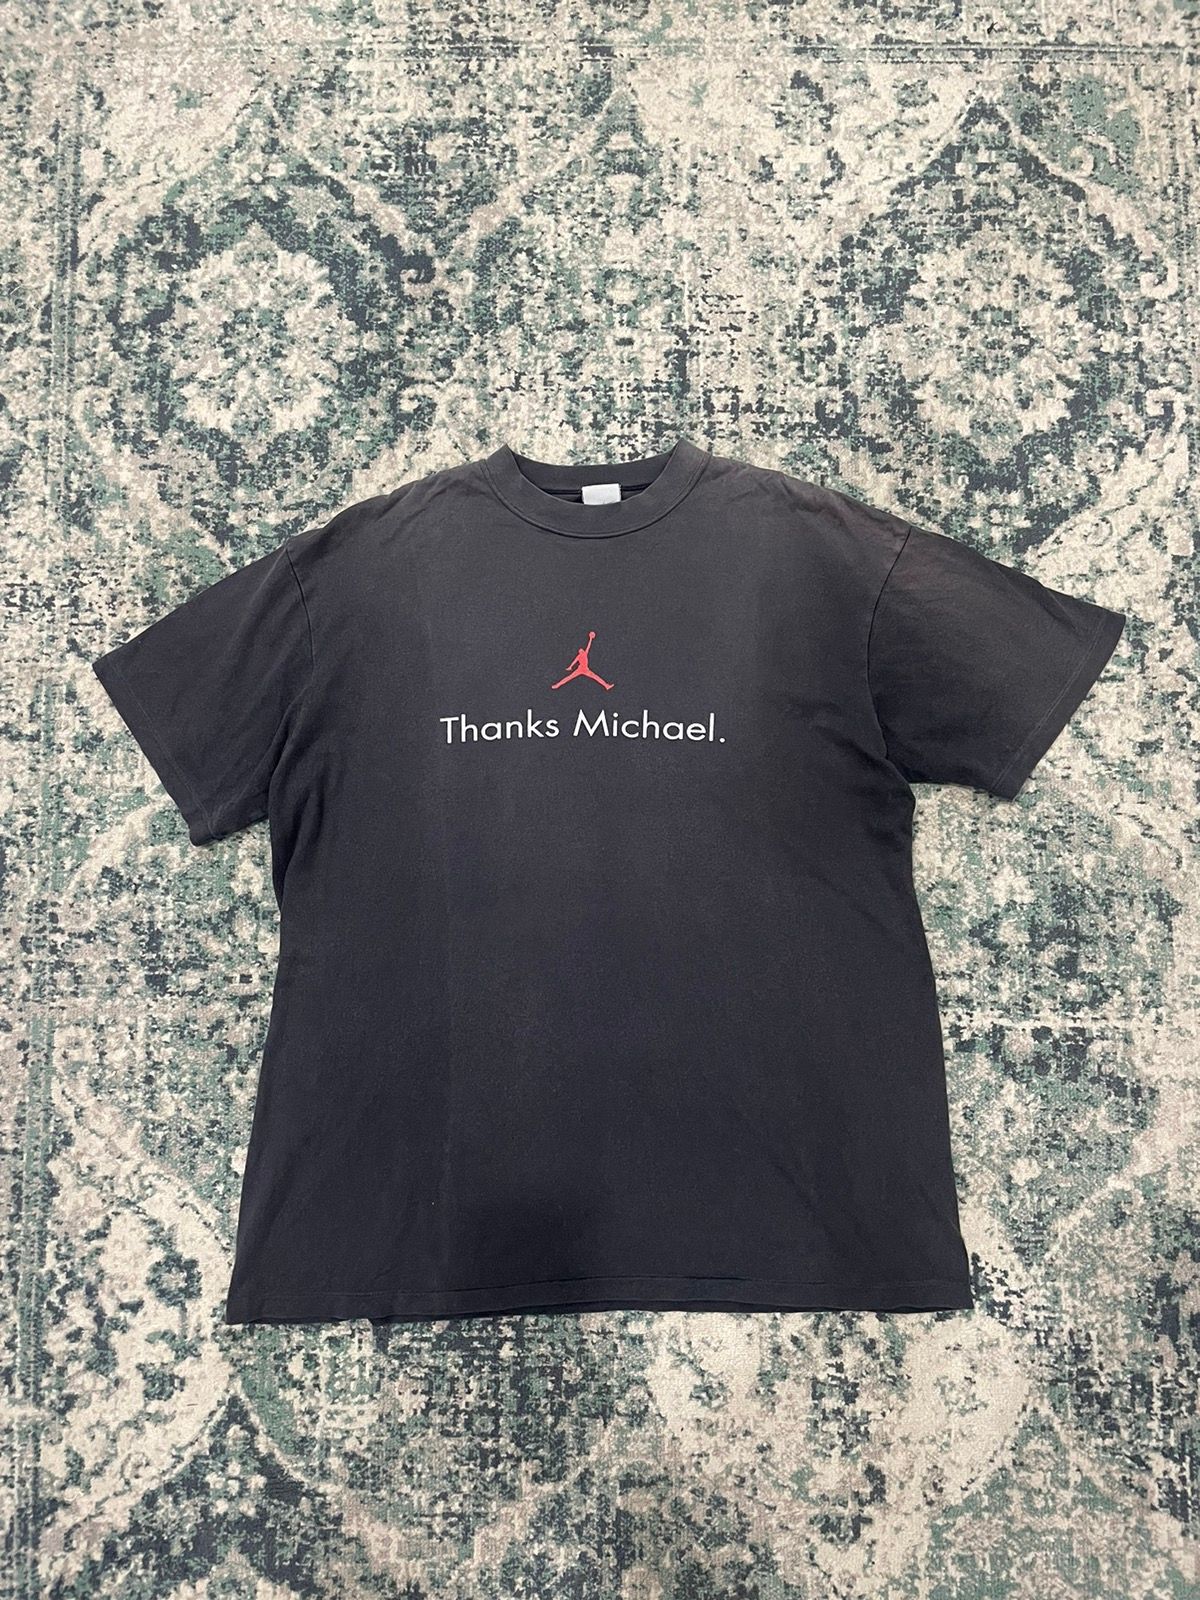 Vintage 90s Nike Thanks Micheal MVP Jordan T-Shirt - 4